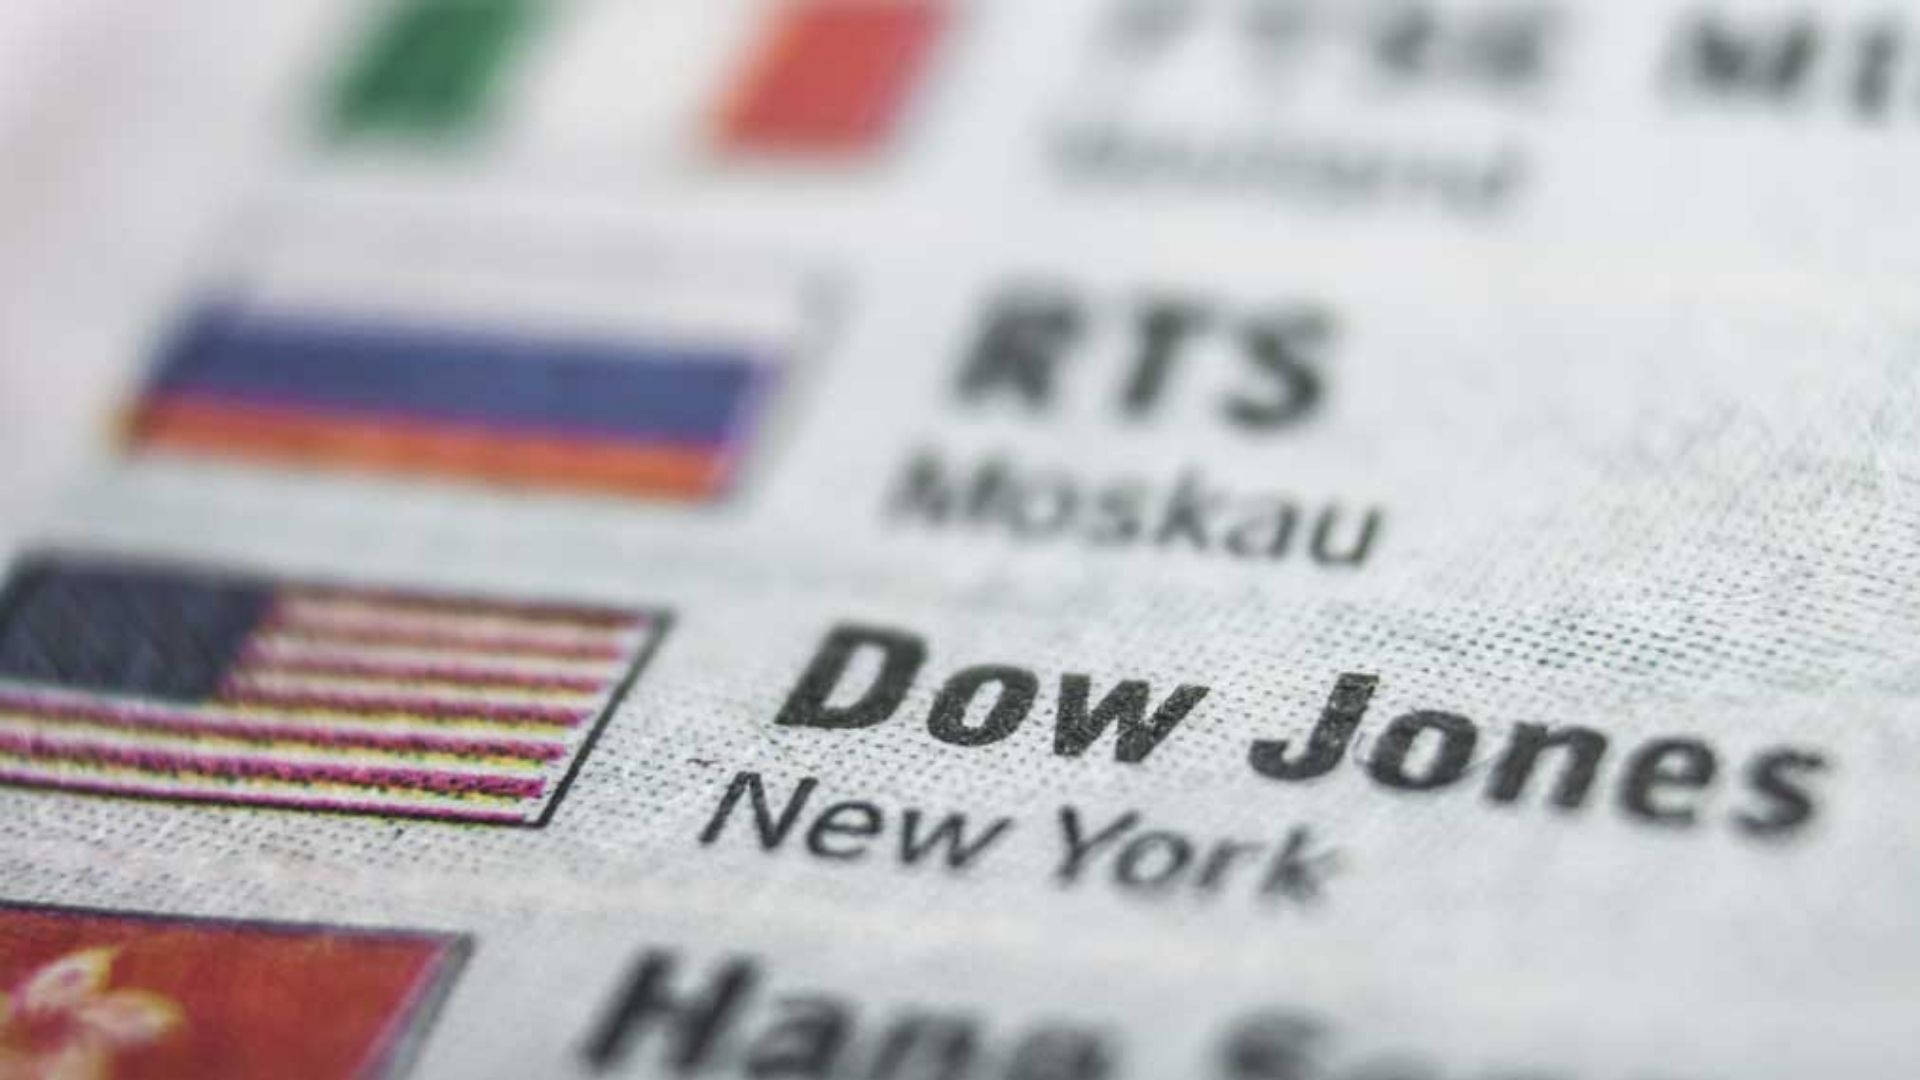 Dow Jones New York